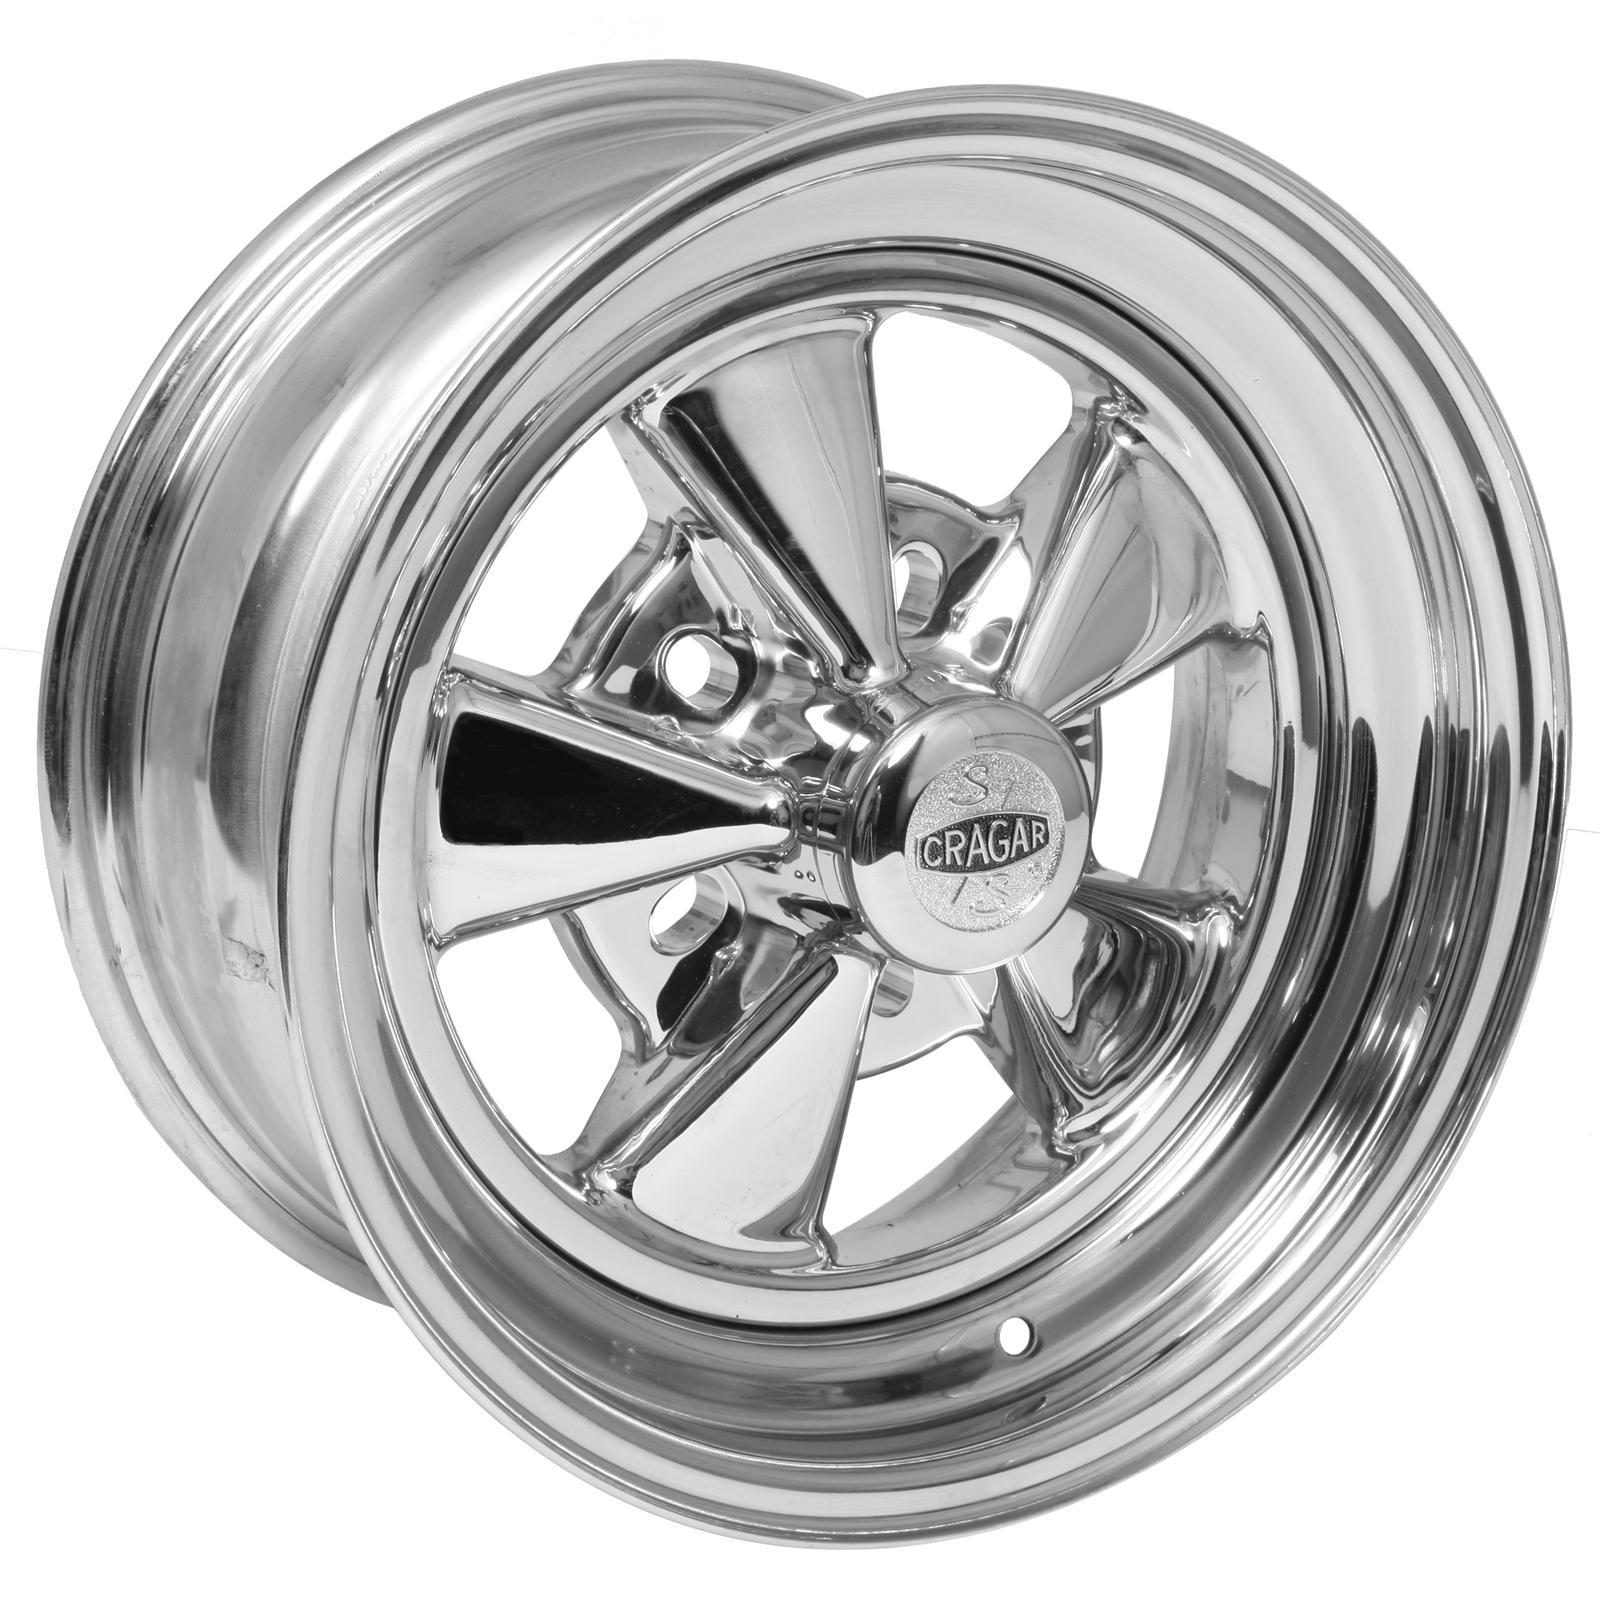 SS Rims Logo - Cragar 08 61 S S Super Sport Chrome Wheels 61715